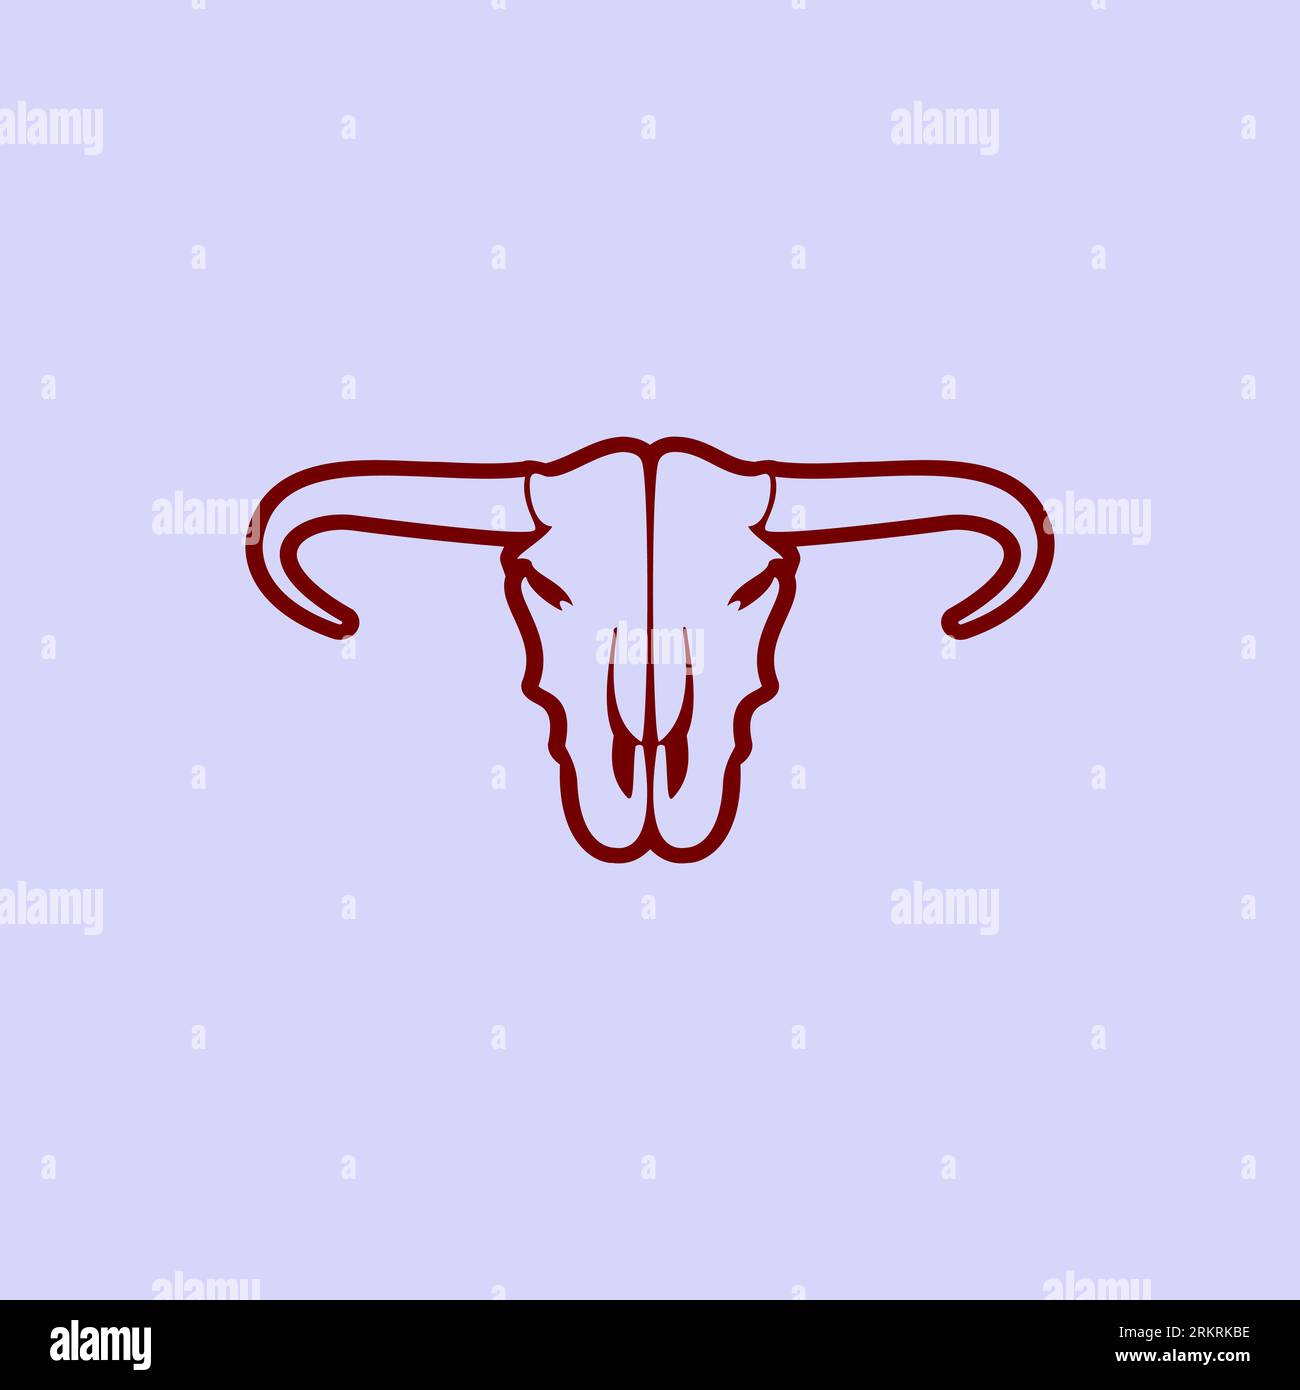 Animals vector graphic in Adobe Illustrator Stock Vector